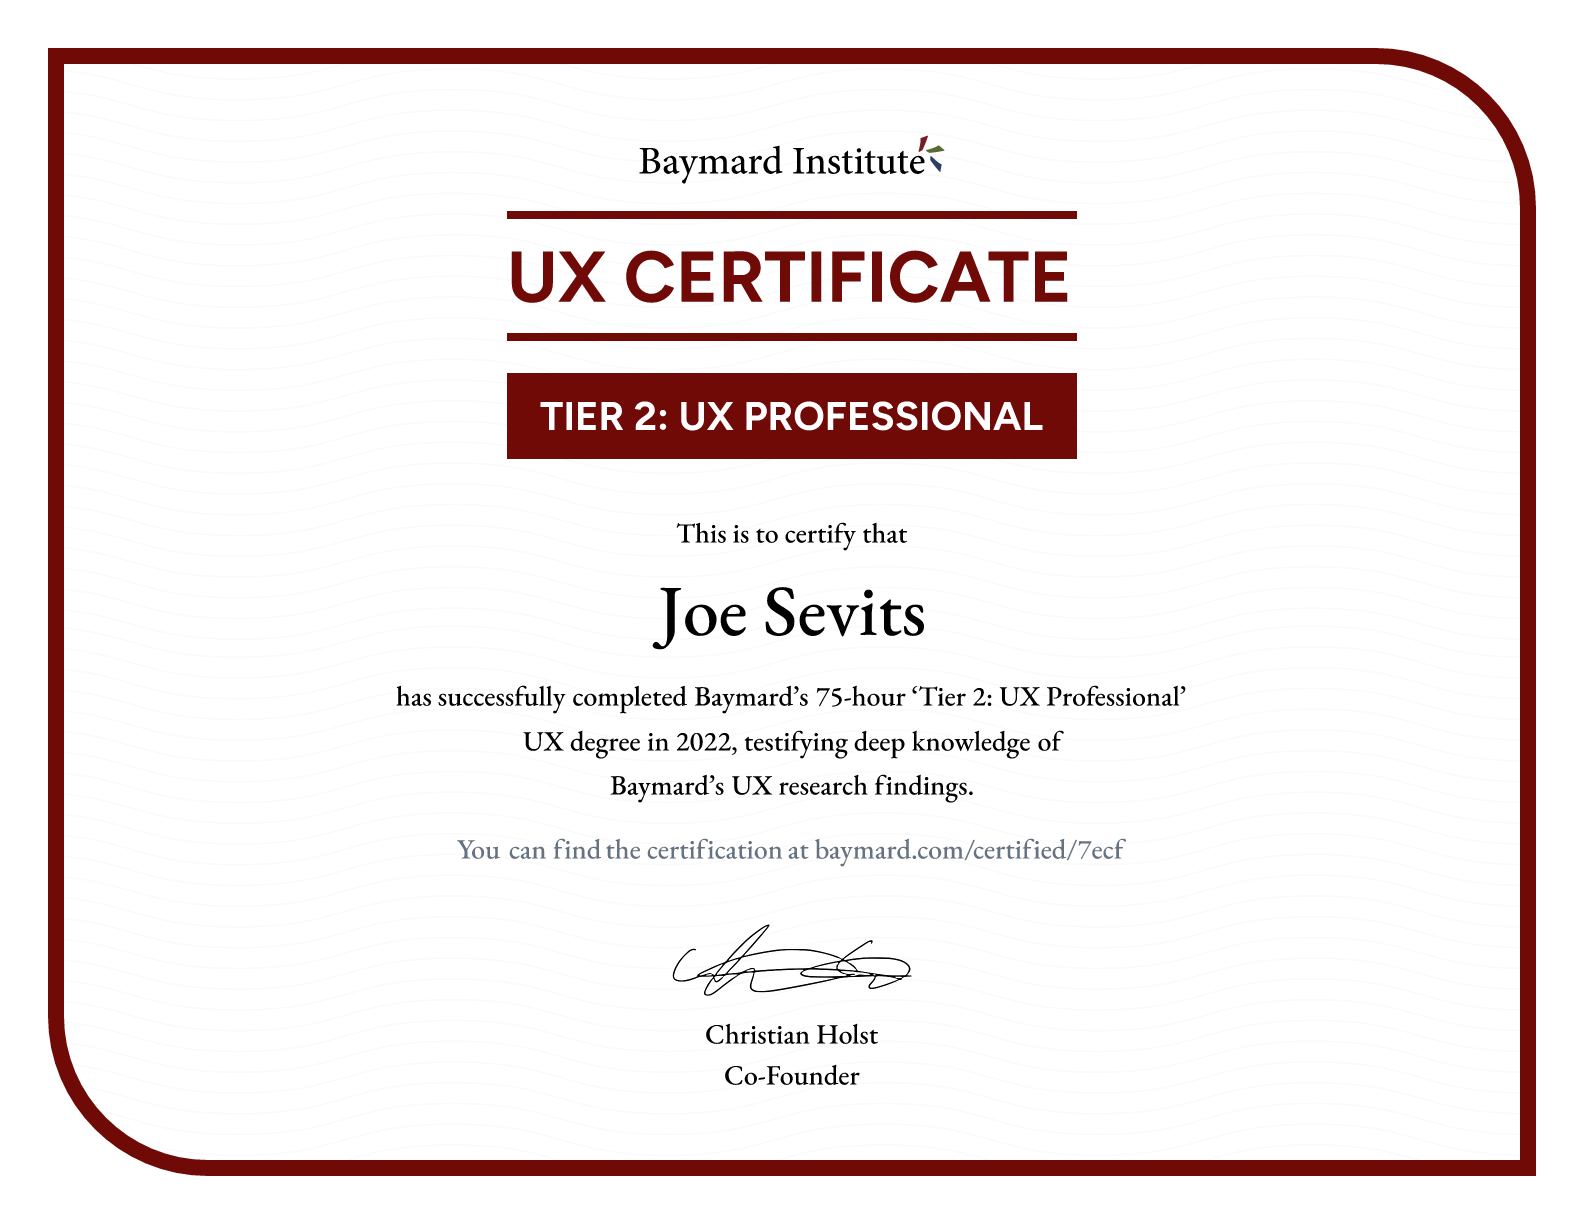 Joe Sevits’s certificate